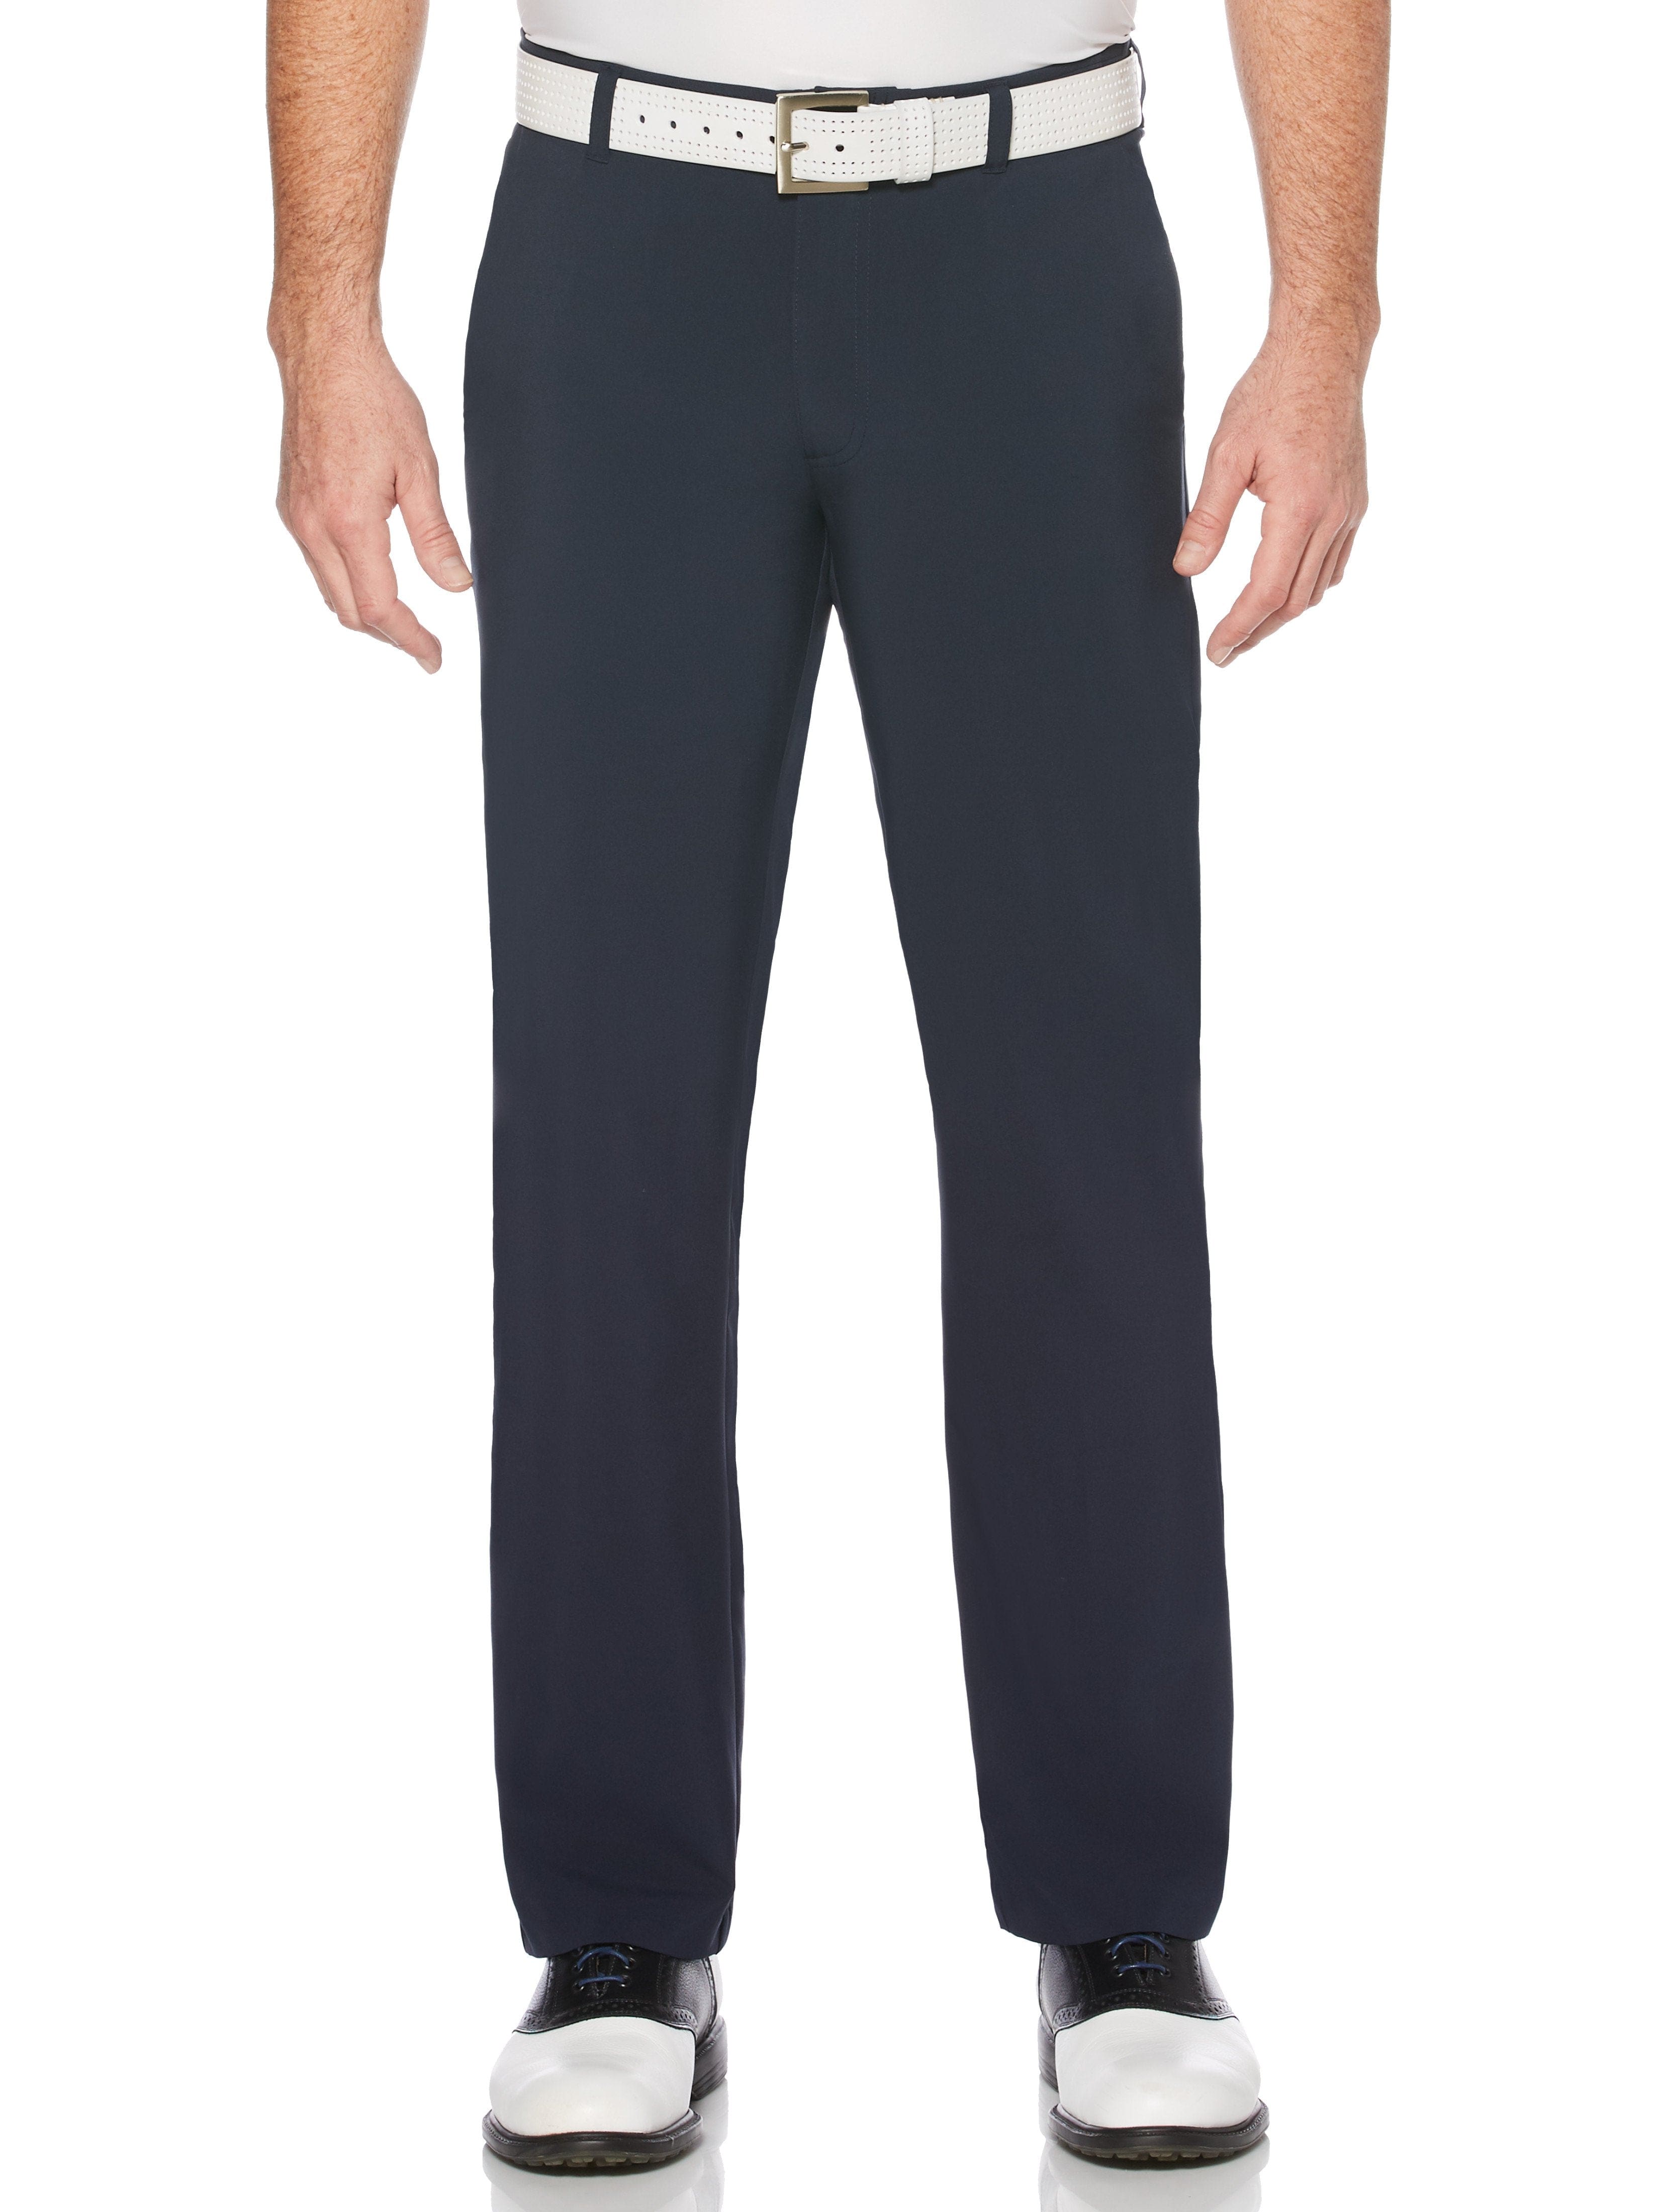 Jack Nicklaus Mens Flat Front Active Flex Pants, Size 32 x 30, Classic Navy Blue, Polyester/Elastane | Golf Apparel Shop